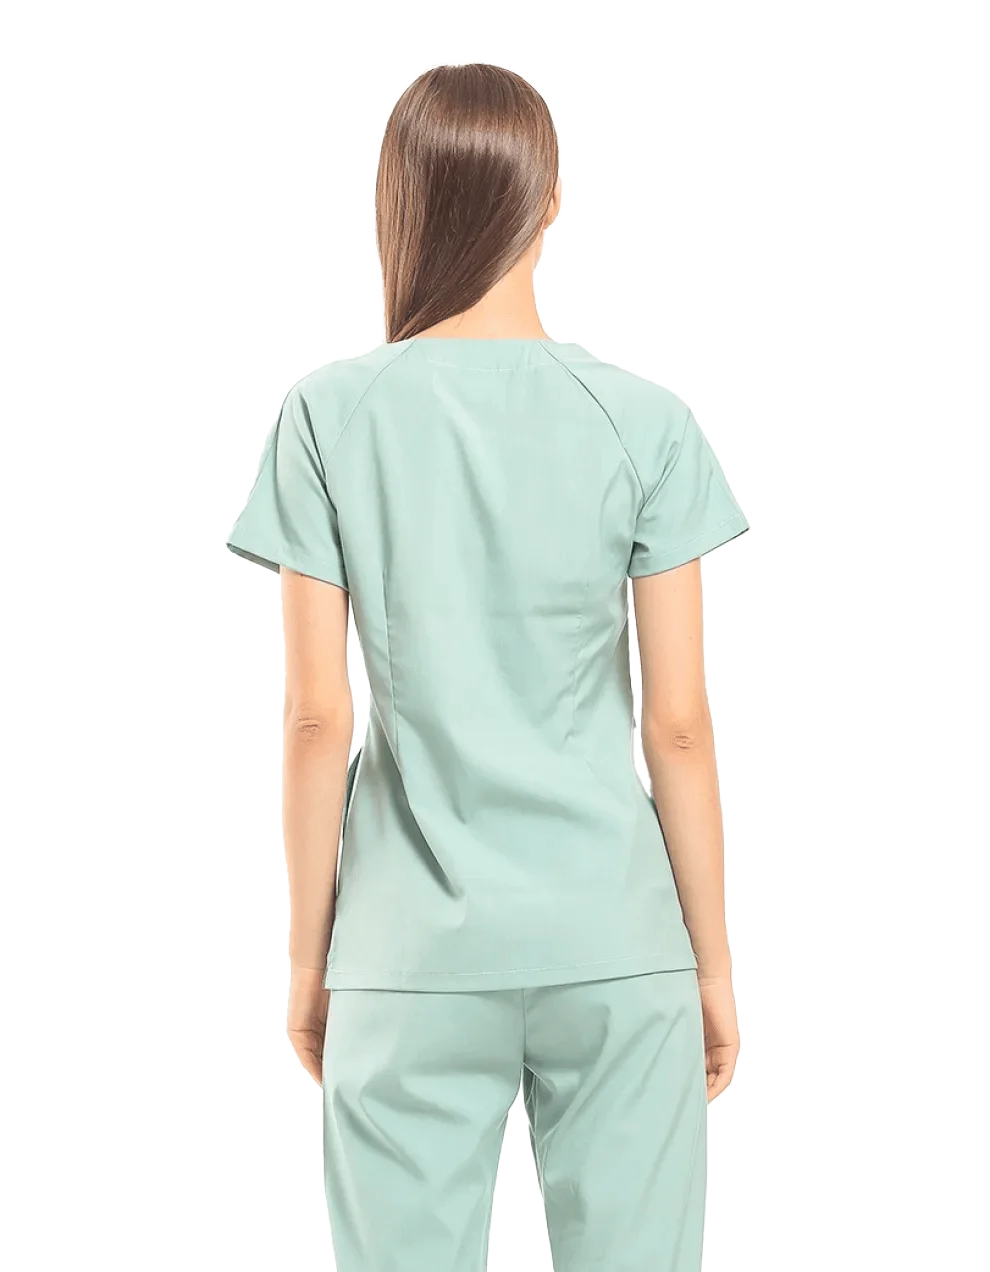 Wio Uniform - Doctor, Surgeon, Dentist, Veterinarian, Nurse